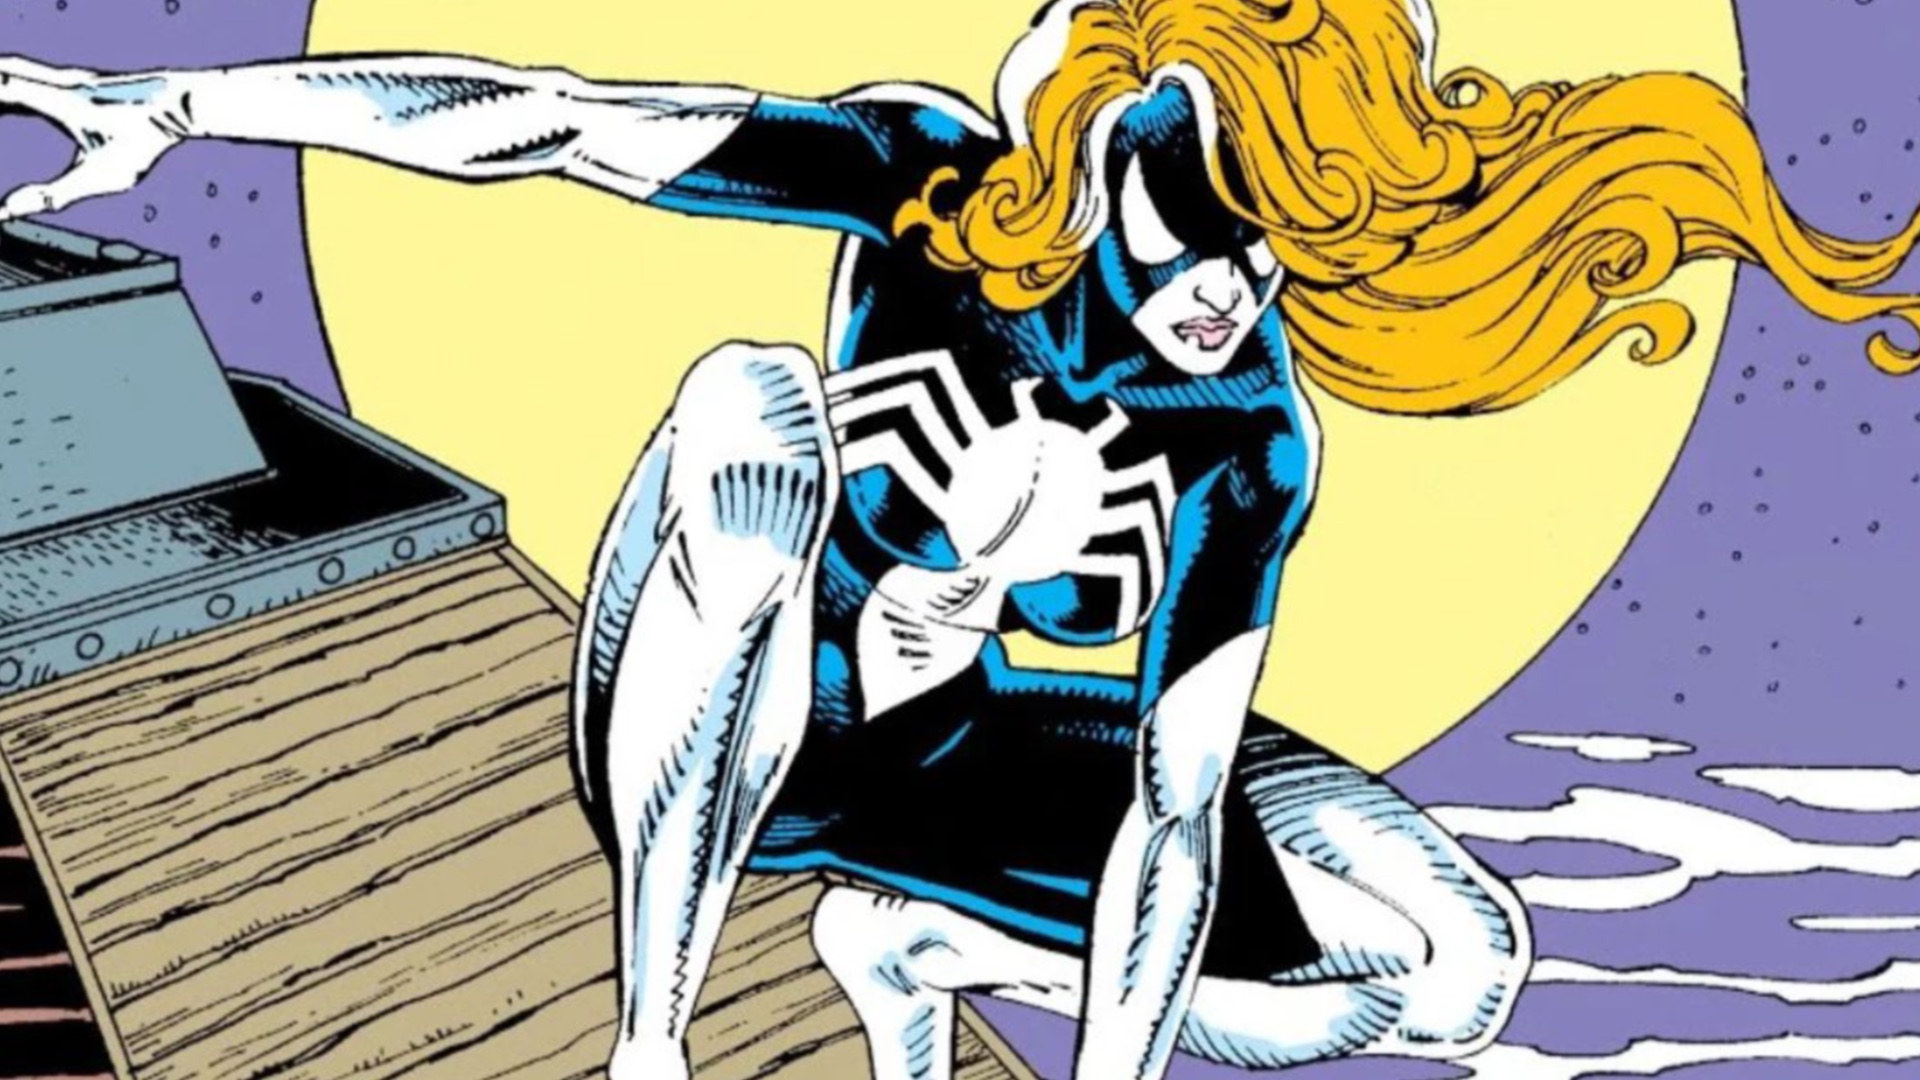 Julia Carpenter has a comic book history as both Spider-Woman and Madame Web | GamesRadar+